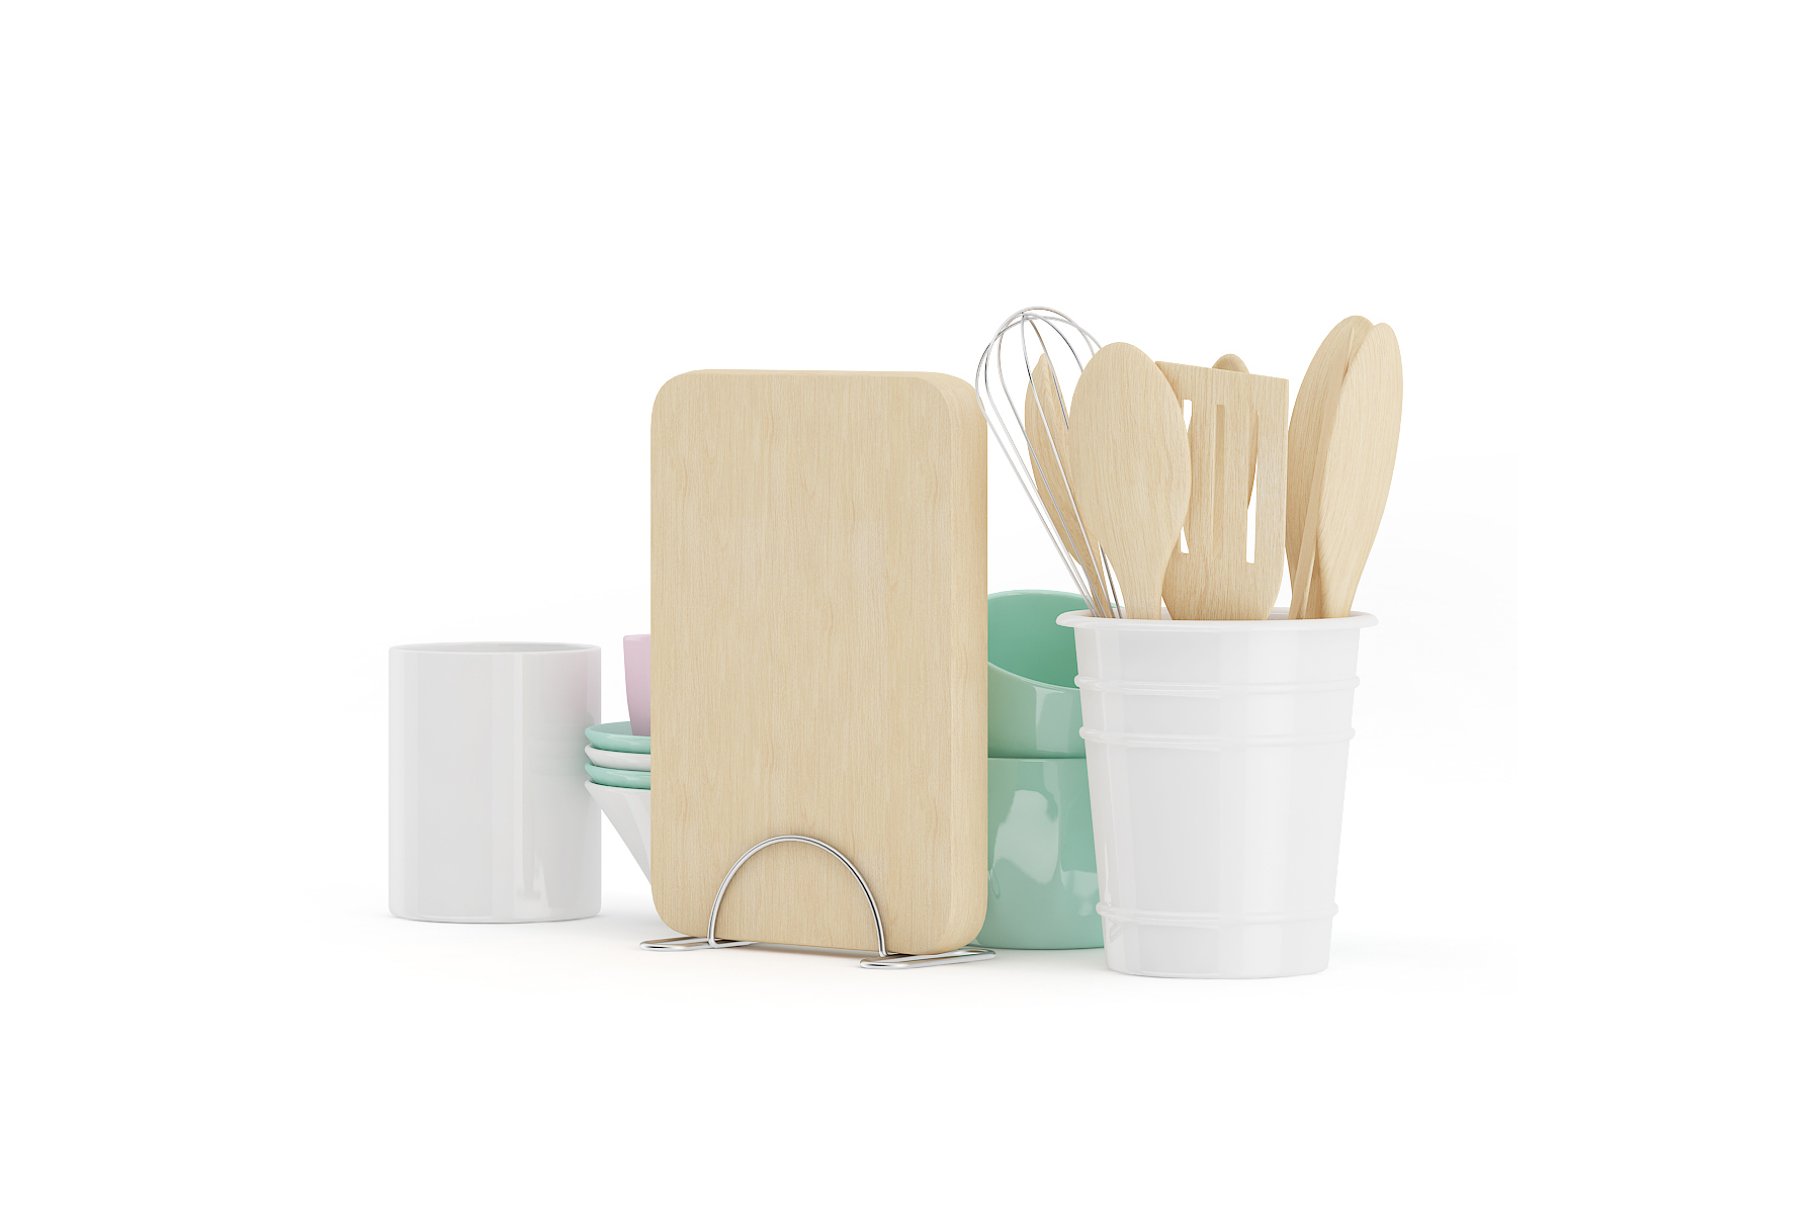 Models of kitchen utensils.